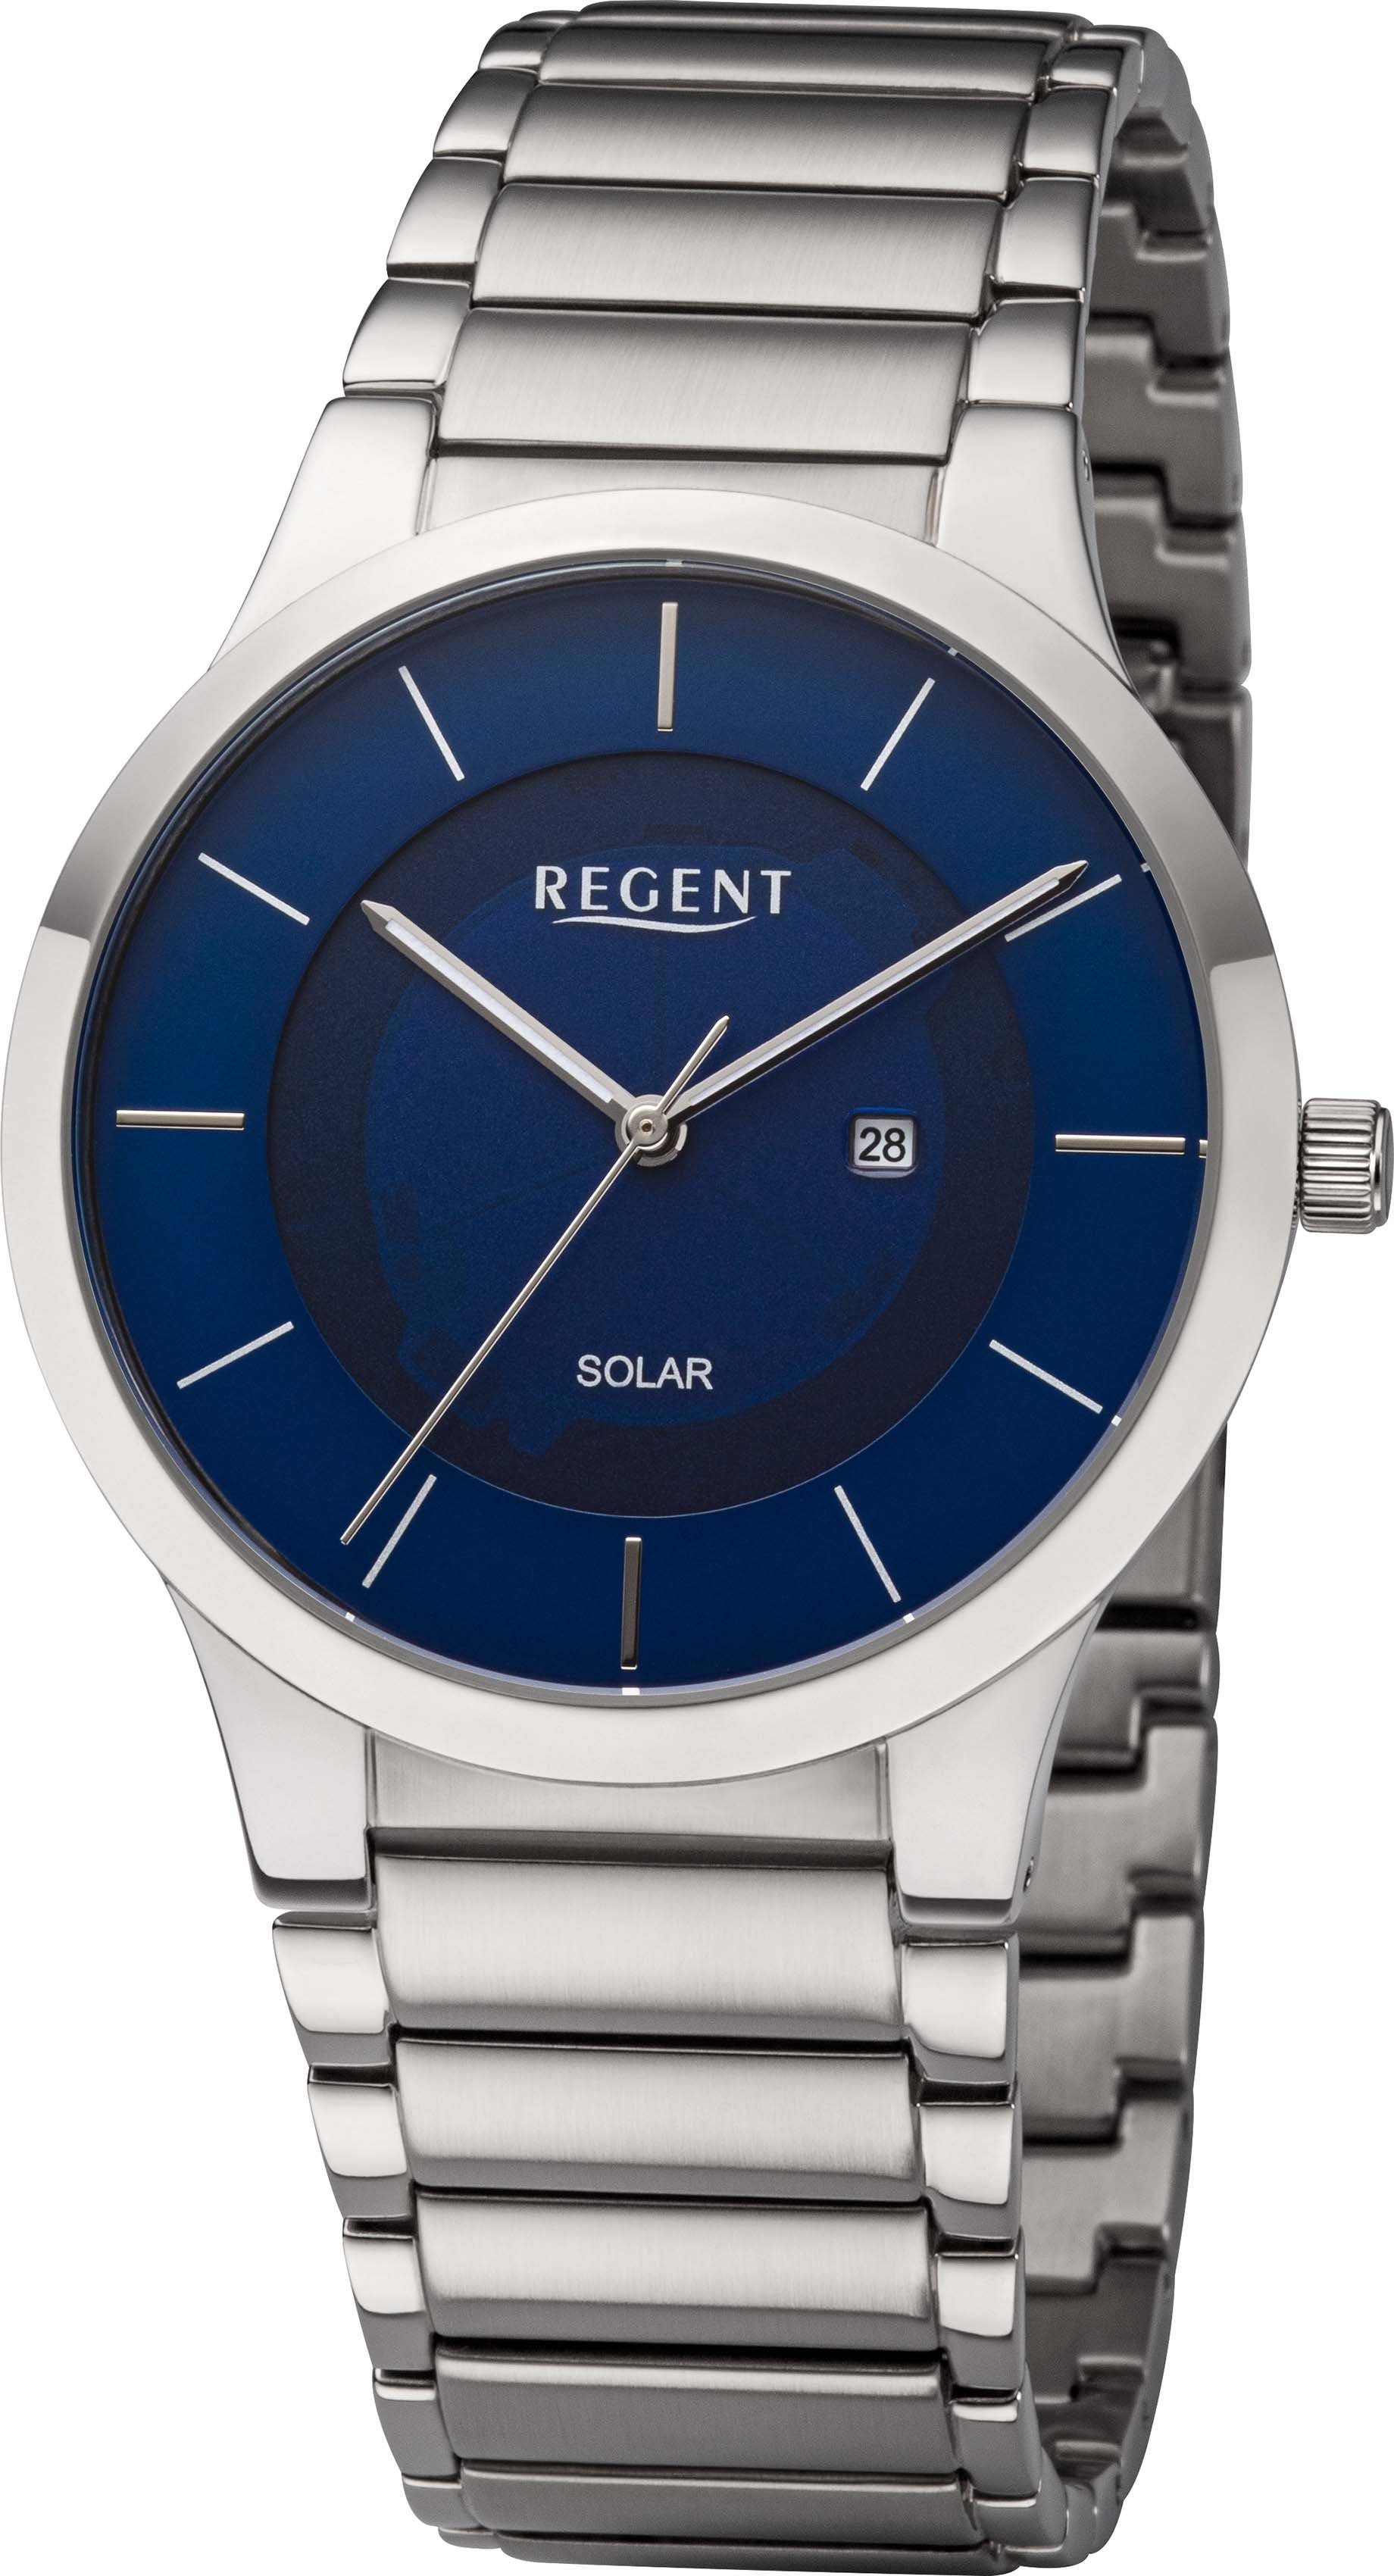 Regent Solaruhr BA-724 - 60015SS/341 blau